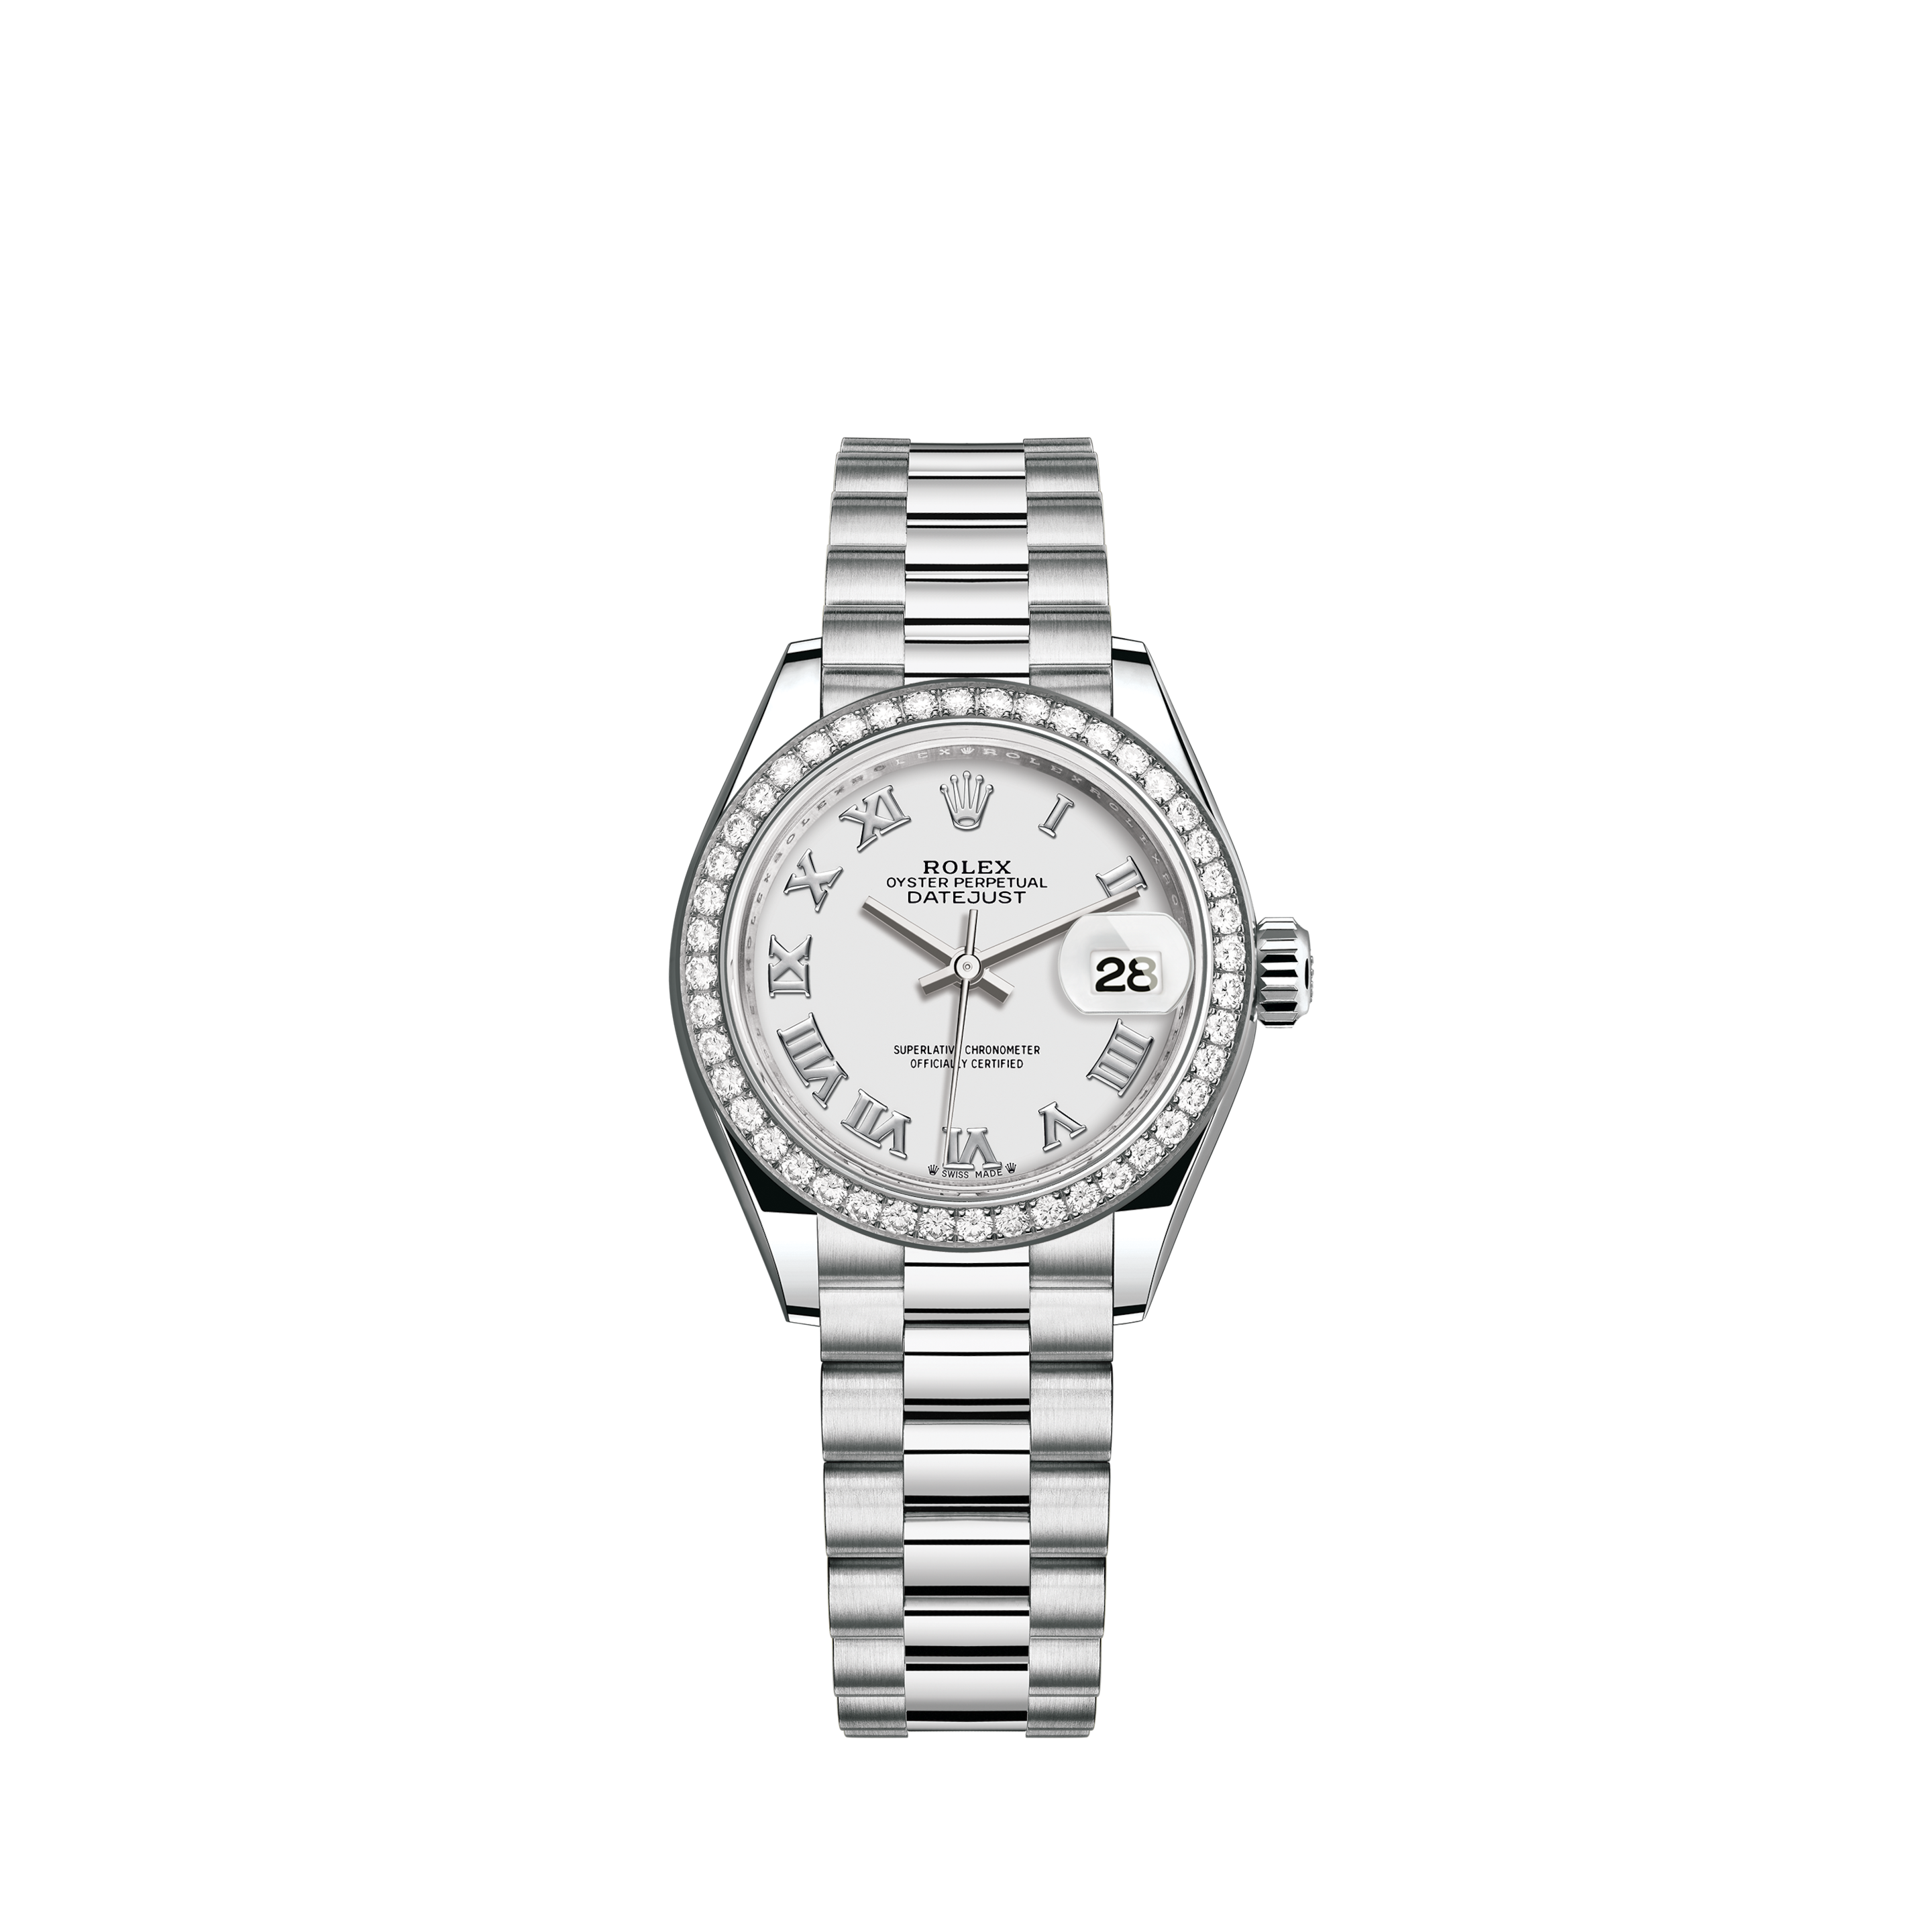 Rolex Lady-Datejust 179384, Baton, 2014, Good, Case material Diamonds, Bracelet material: Steel